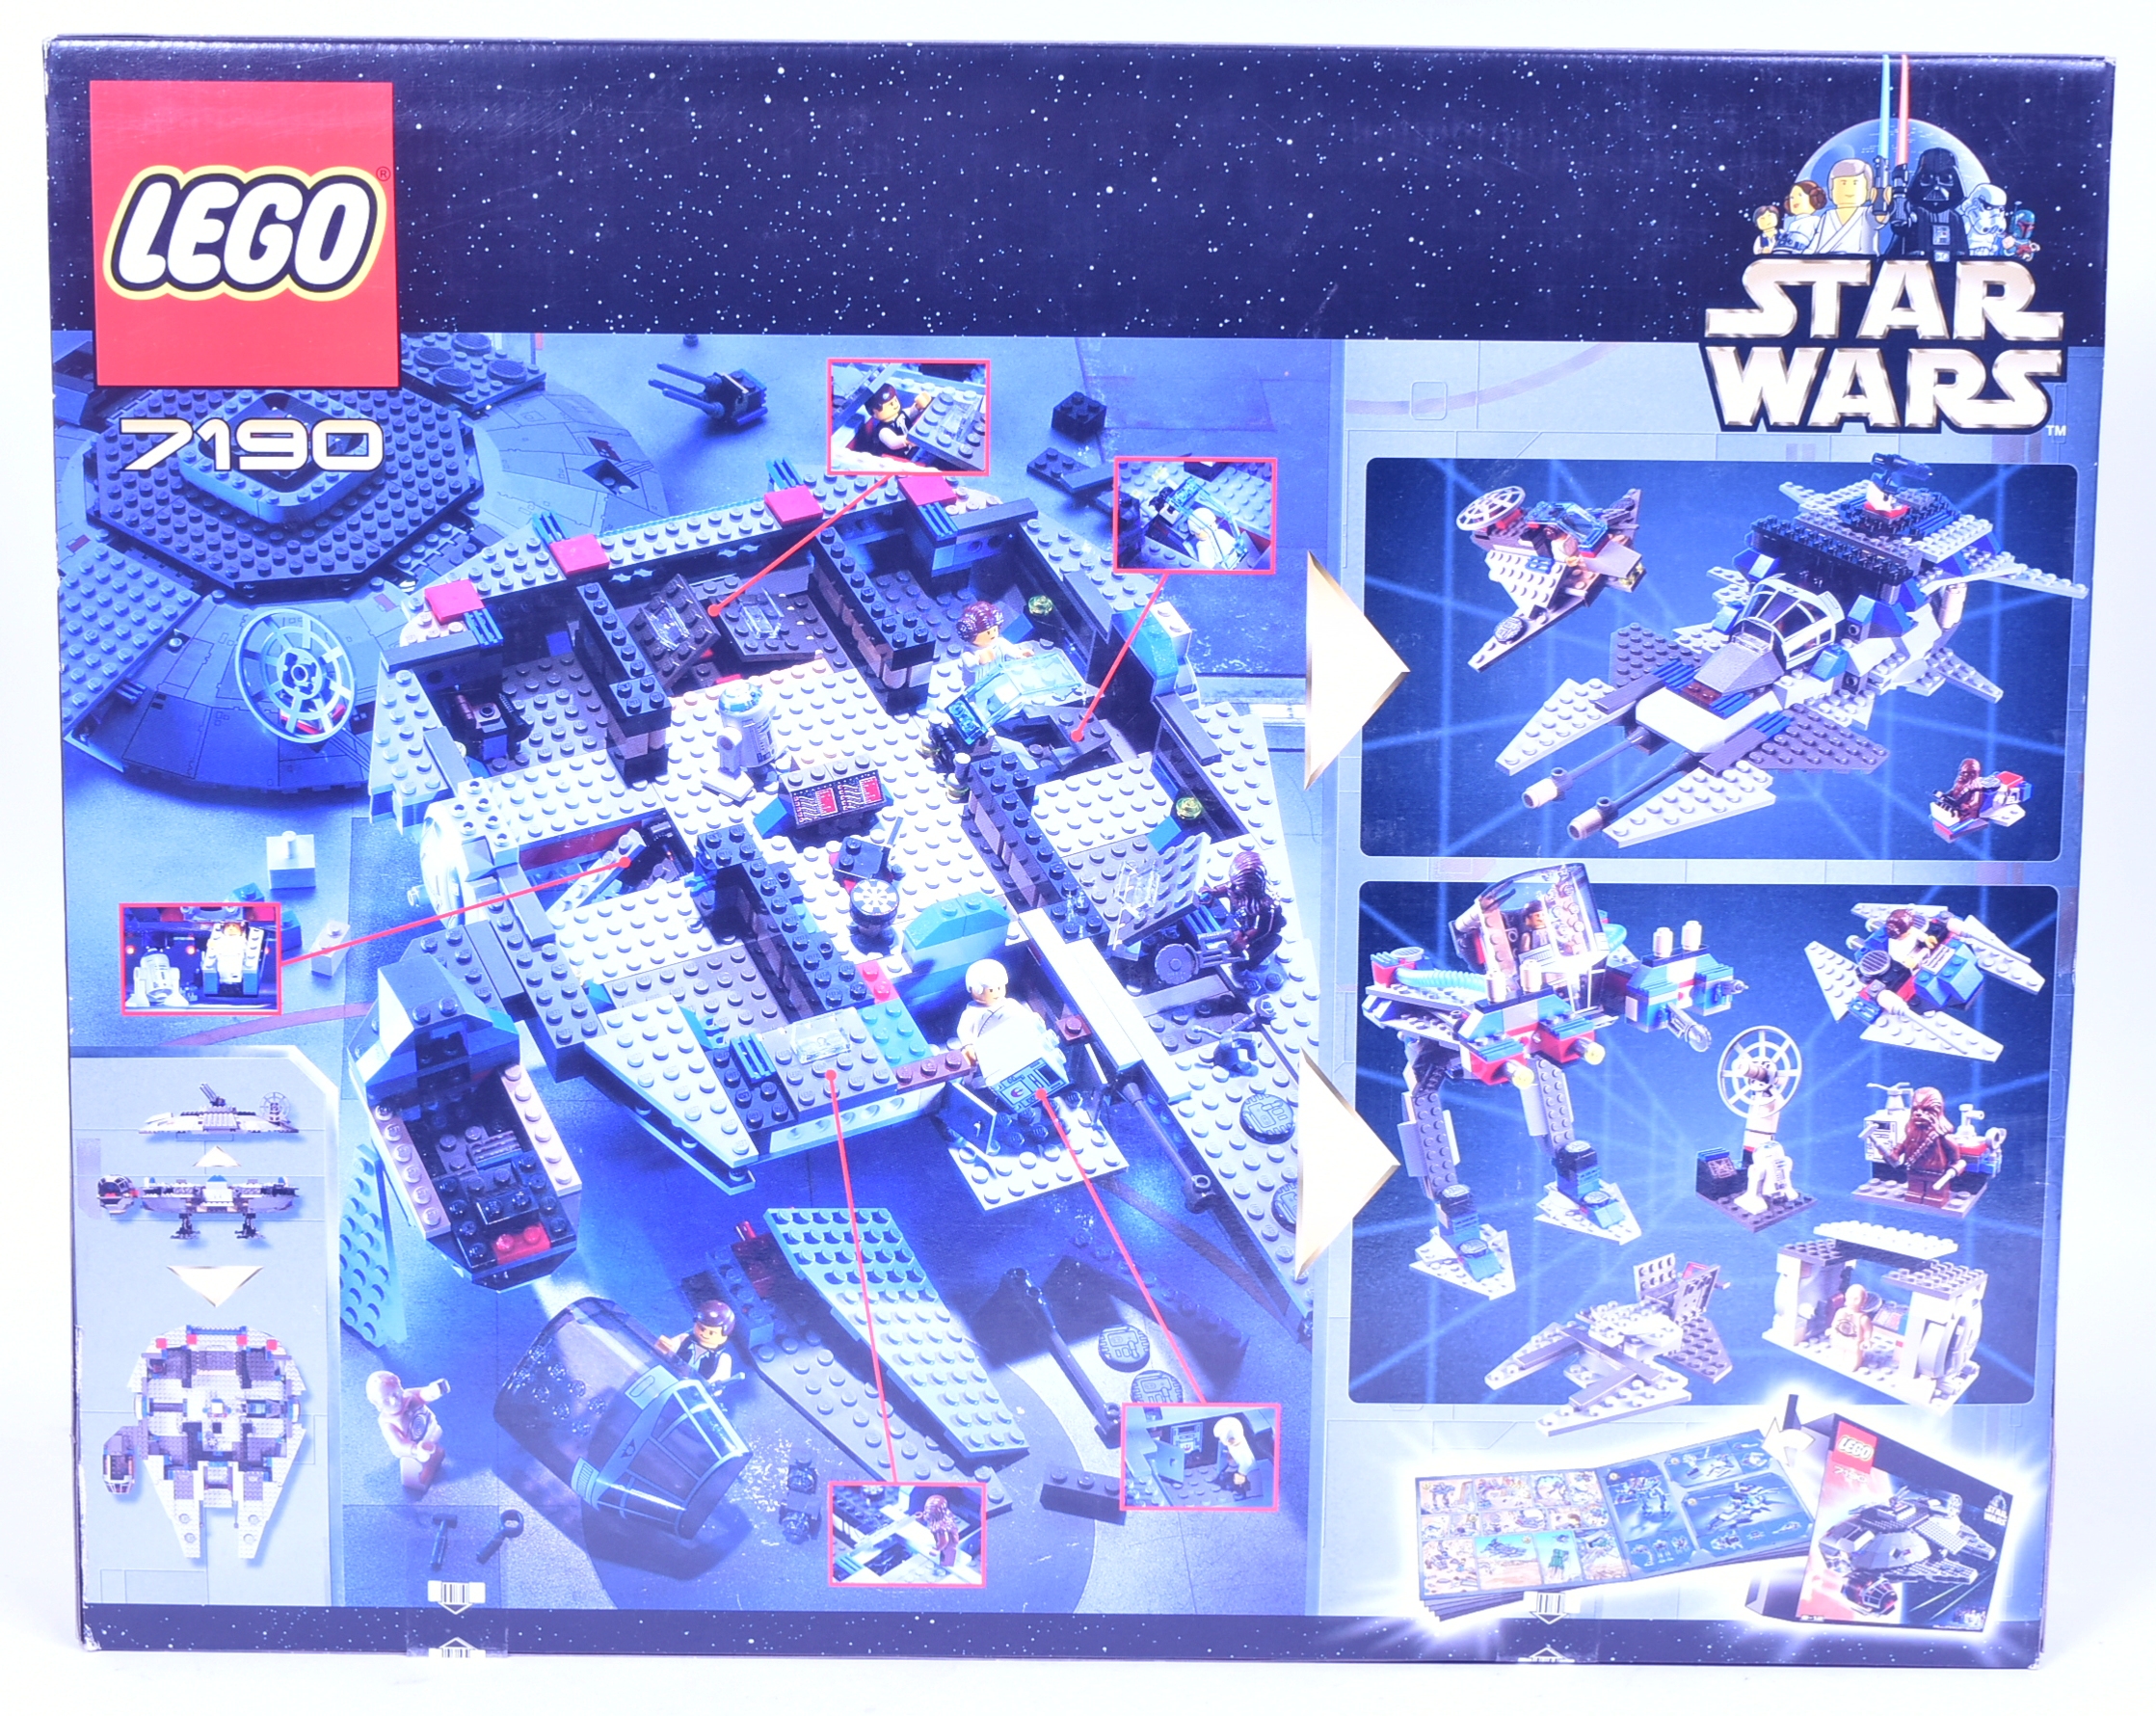 LEGO - STAR WARS - 7190 - MILLENNIUM FALCON - Image 2 of 3